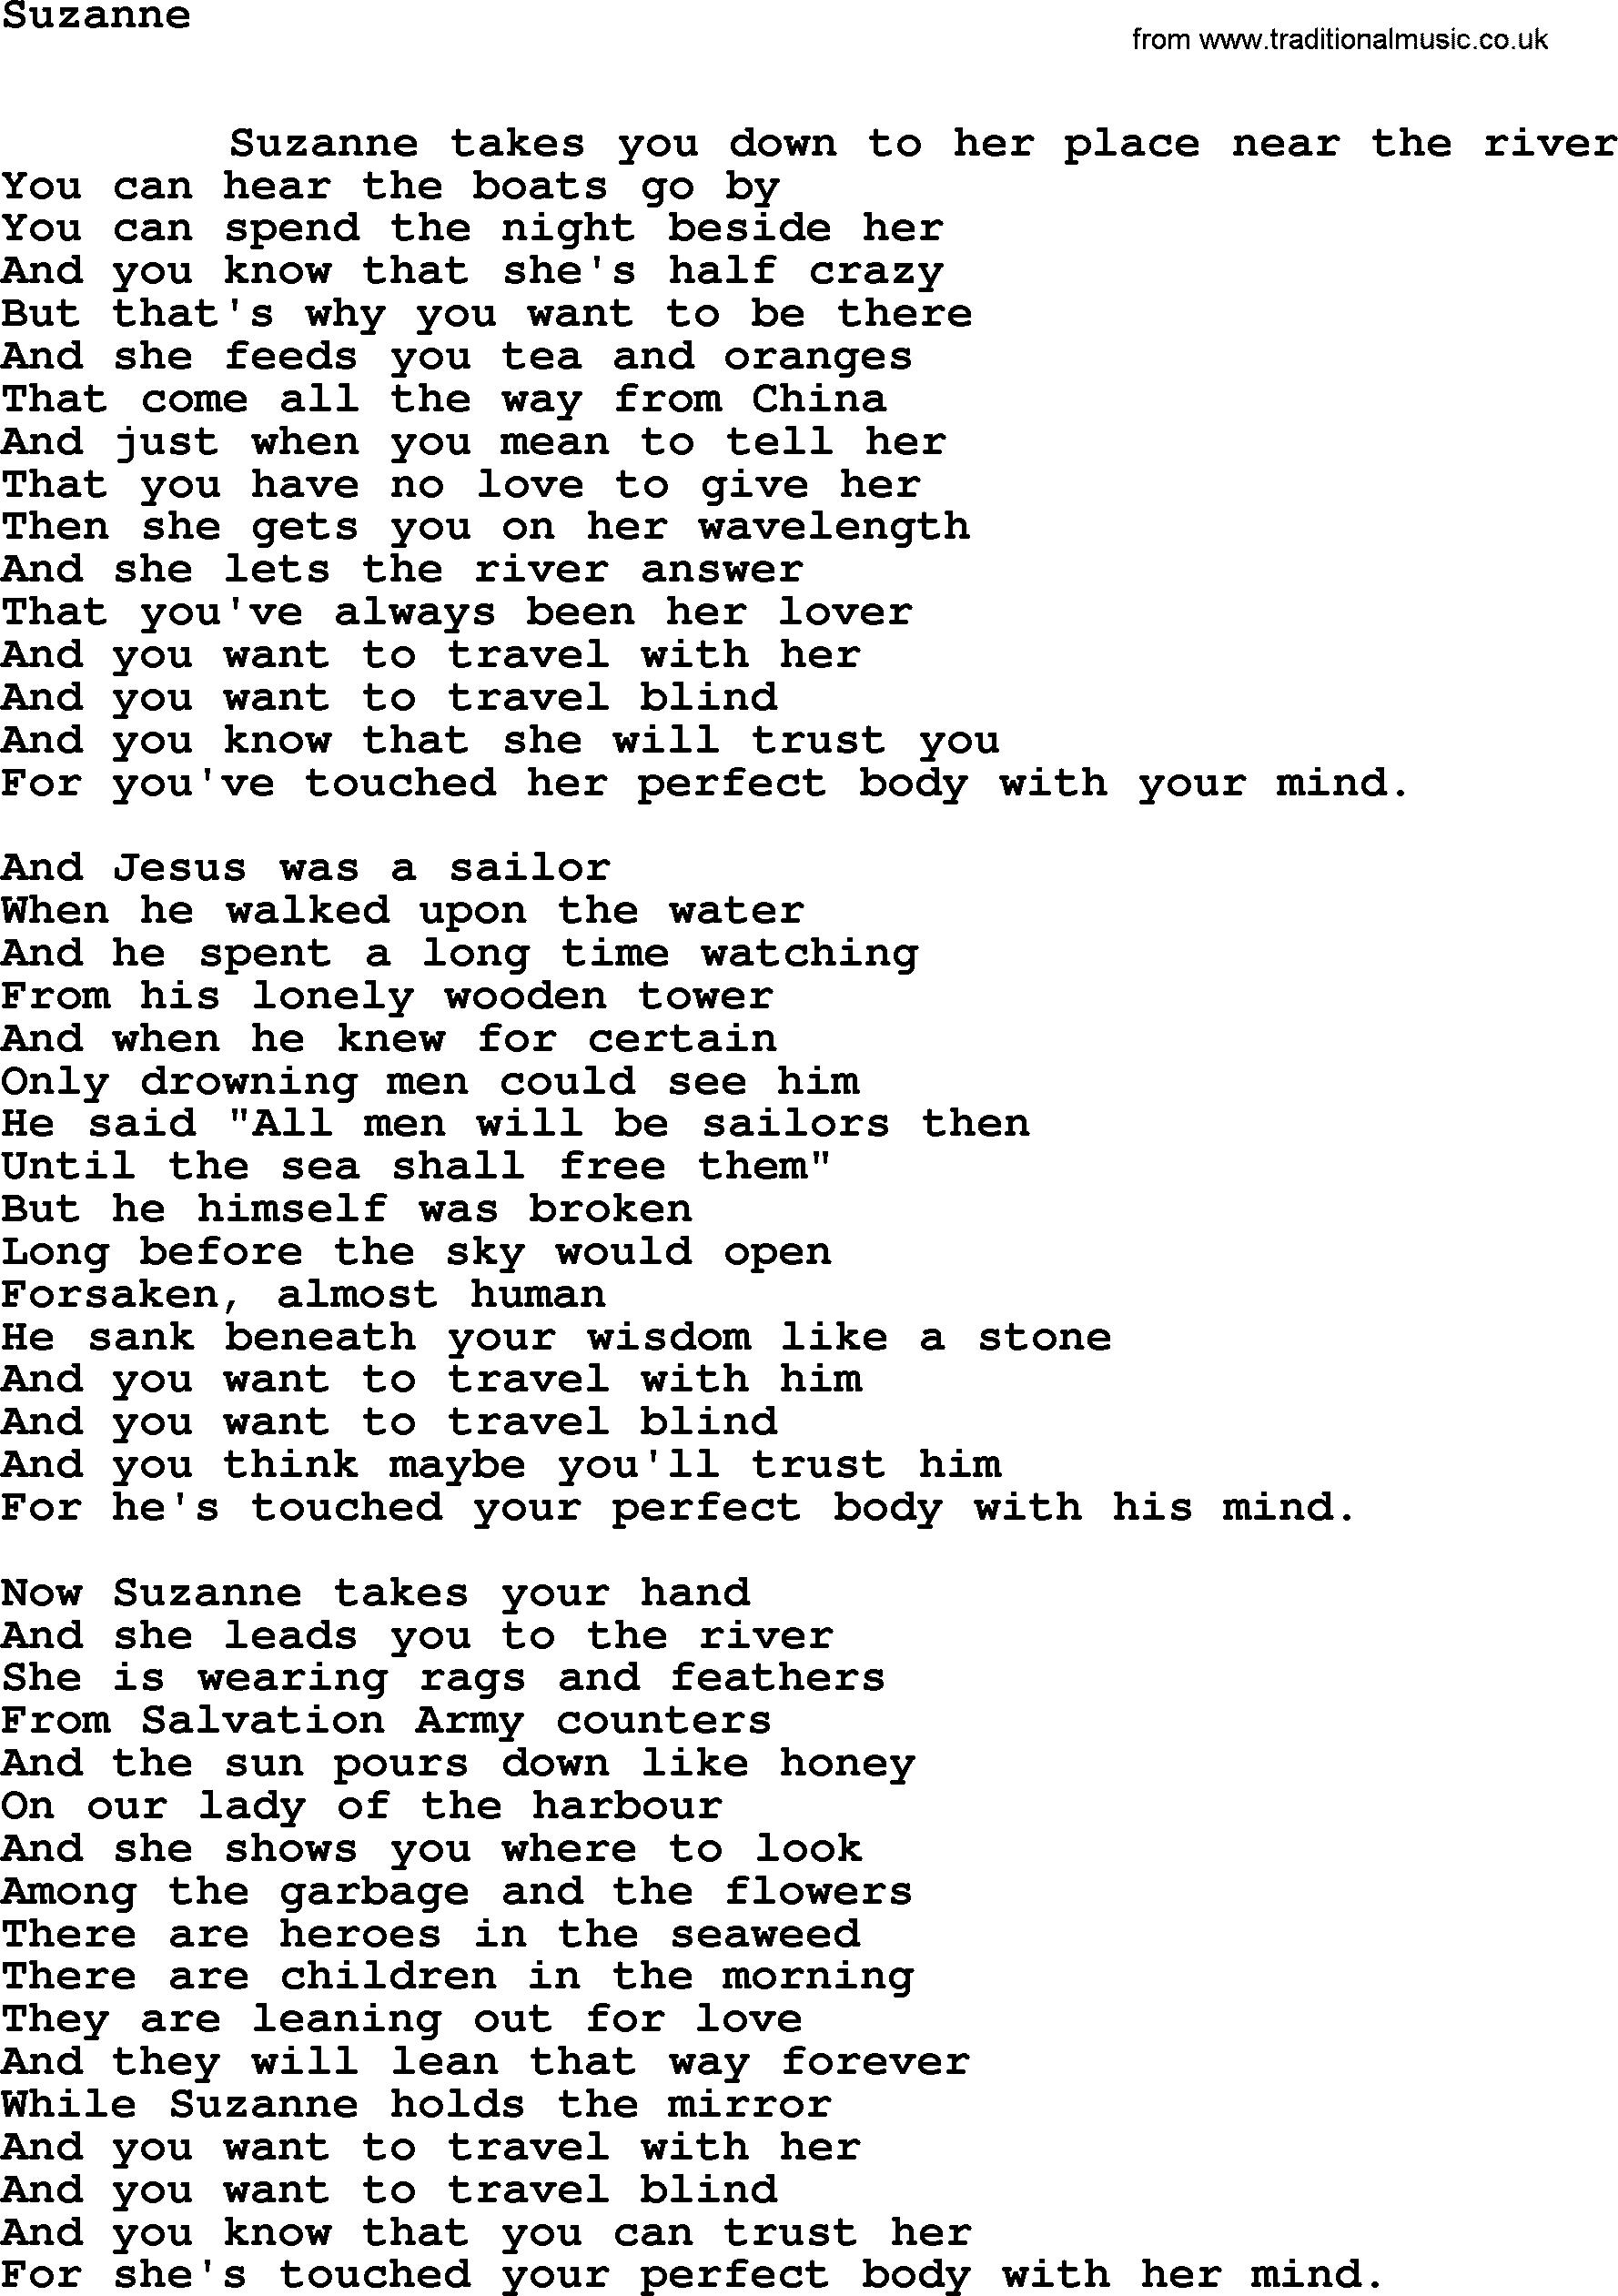 Leonard Cohen song Suzanne-leonard-cohen.txt lyrics